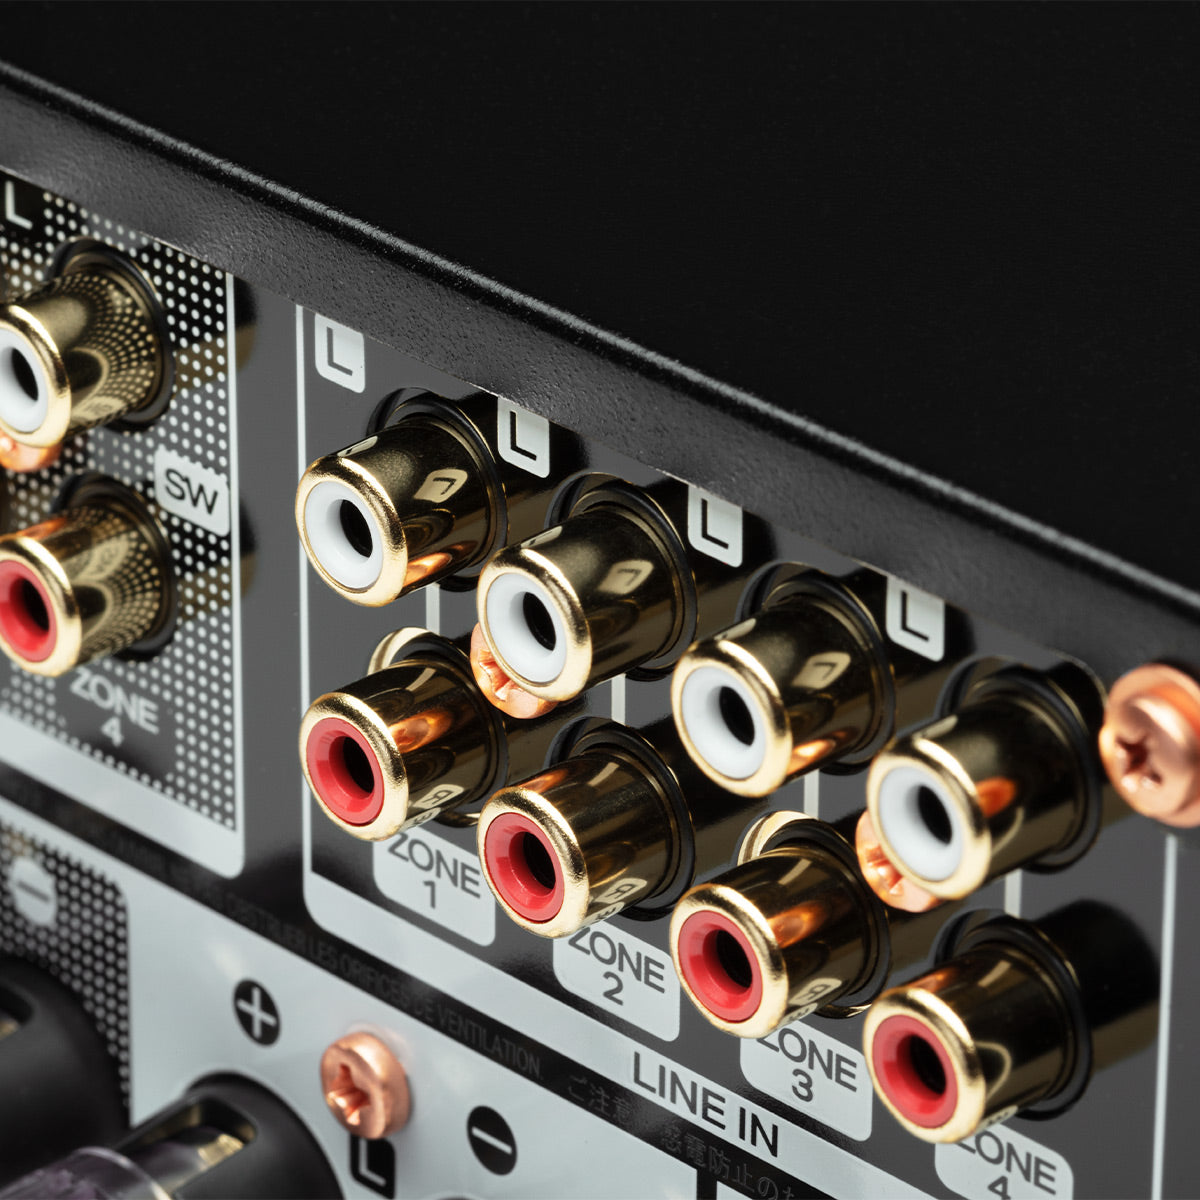 Marantz Model M4 8-Channel 4-Zone Distribution Amplifier with HEOS